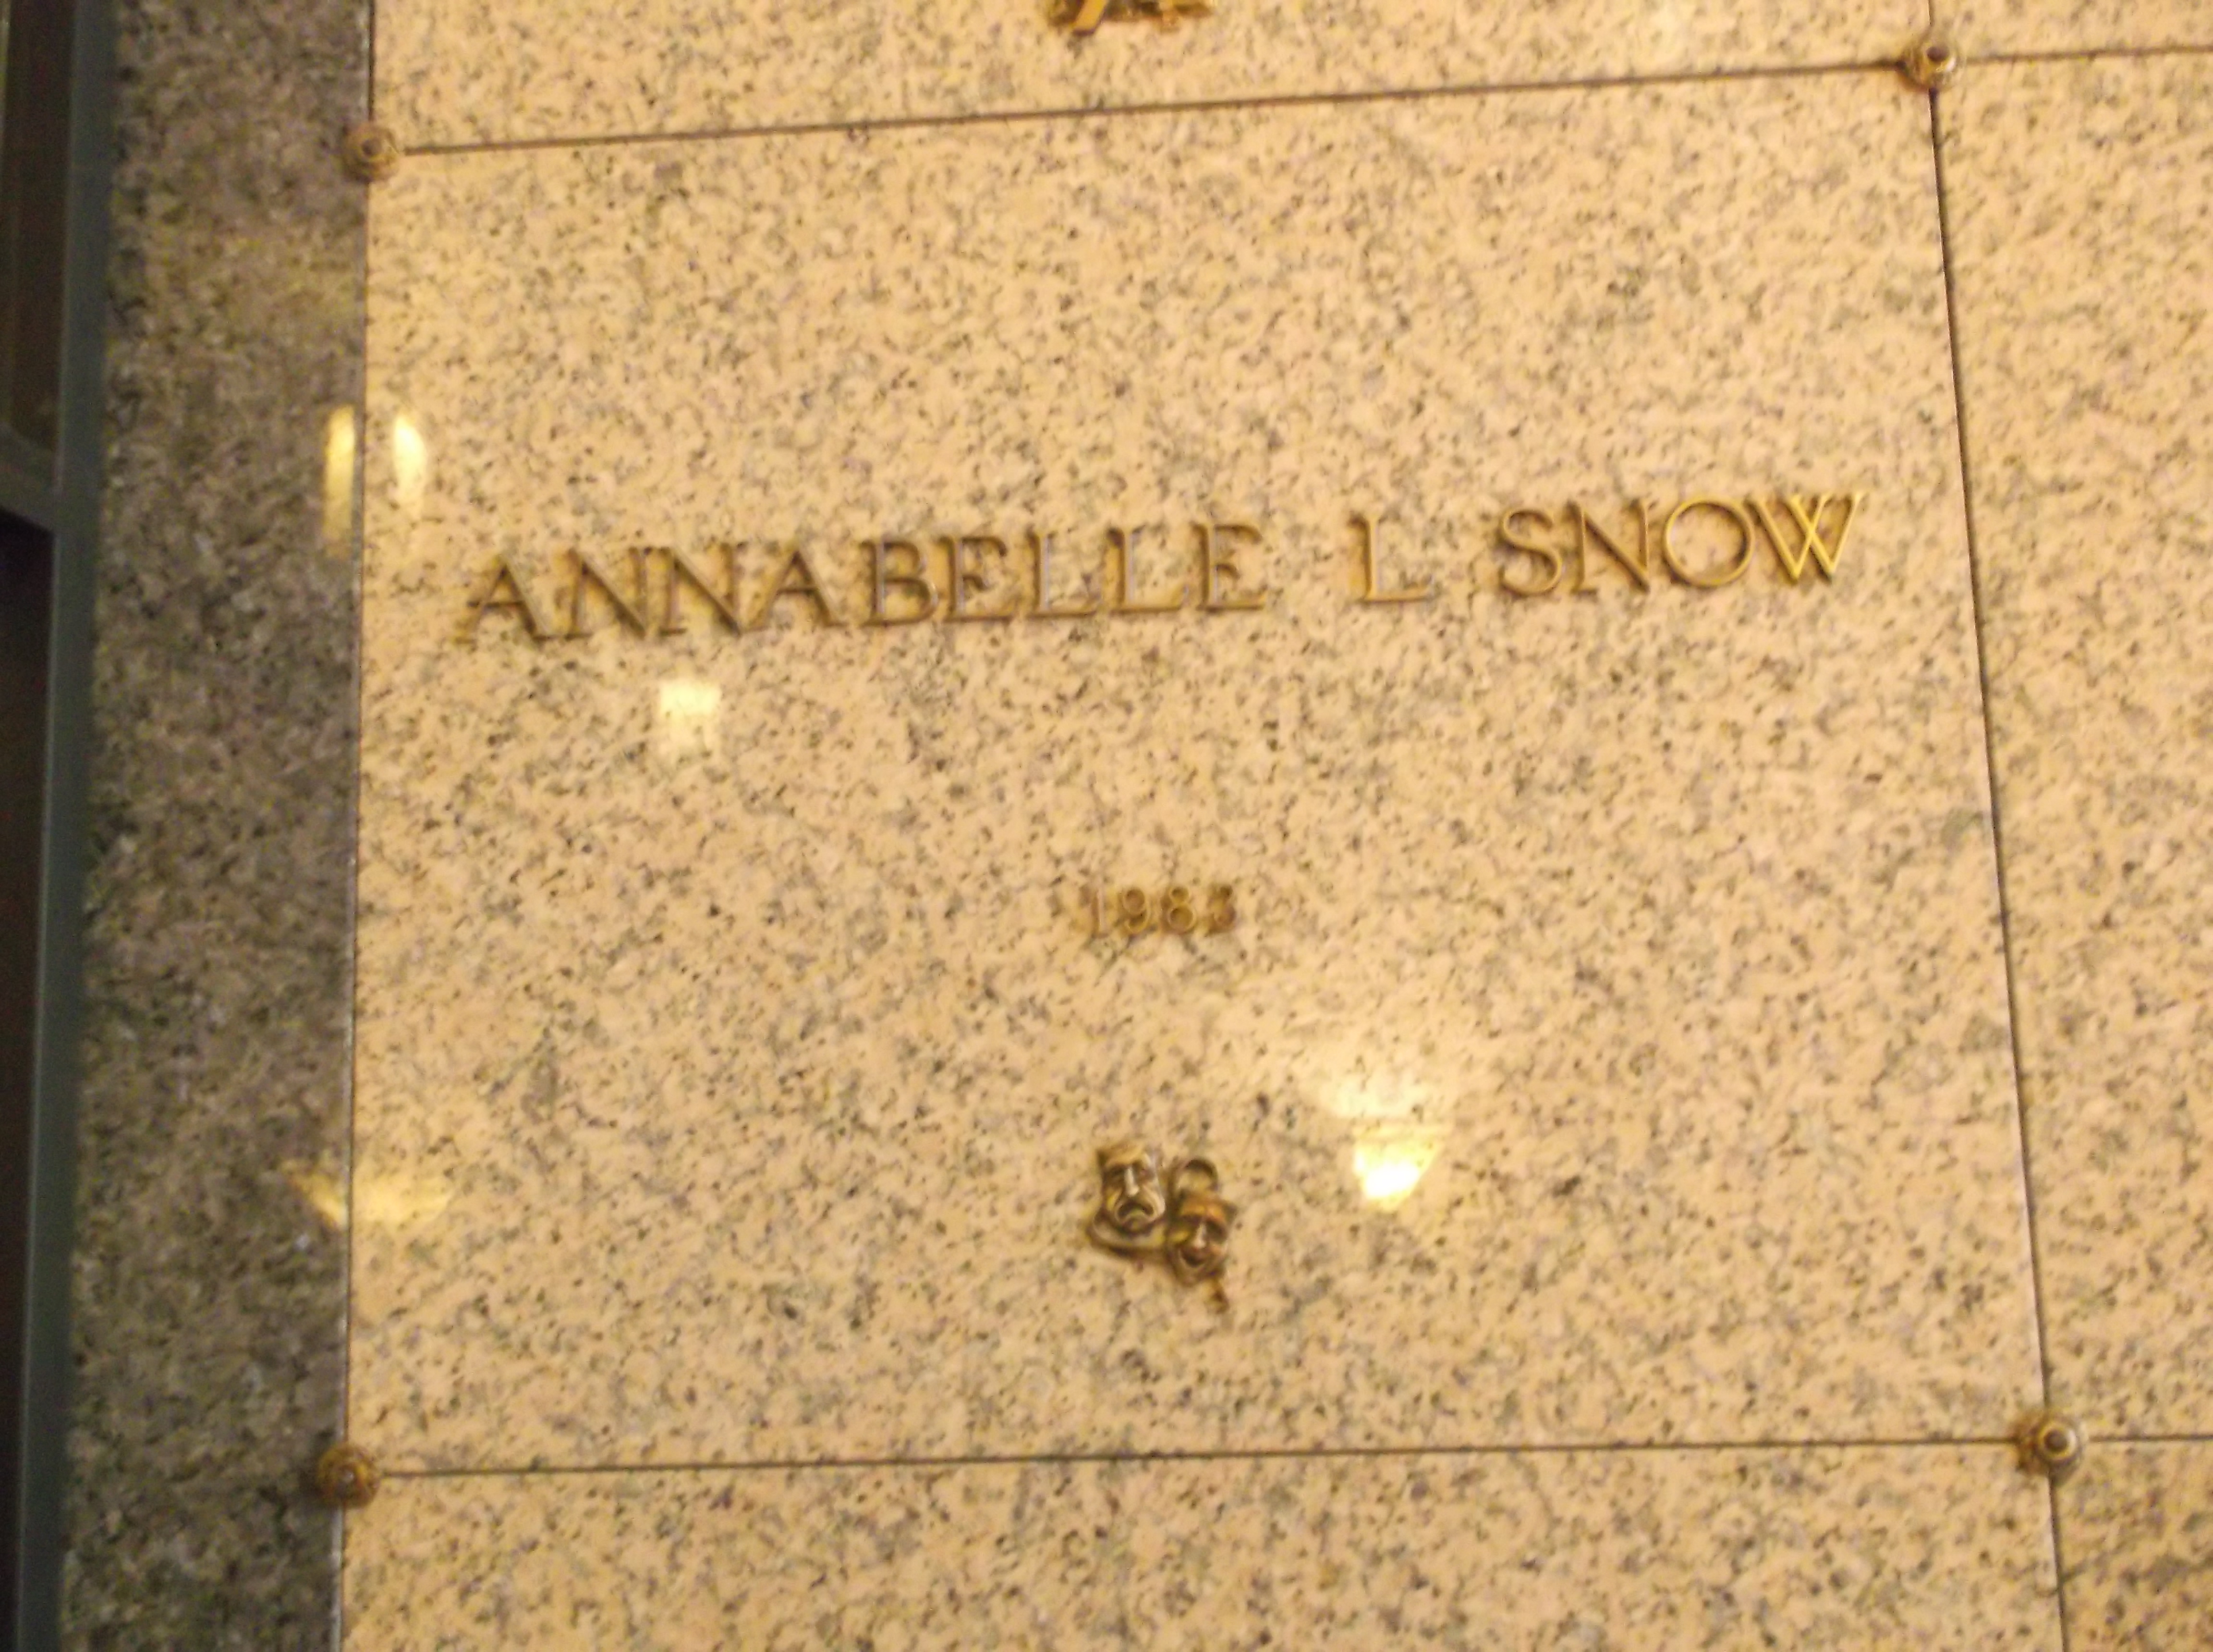 Annabelle L Snow